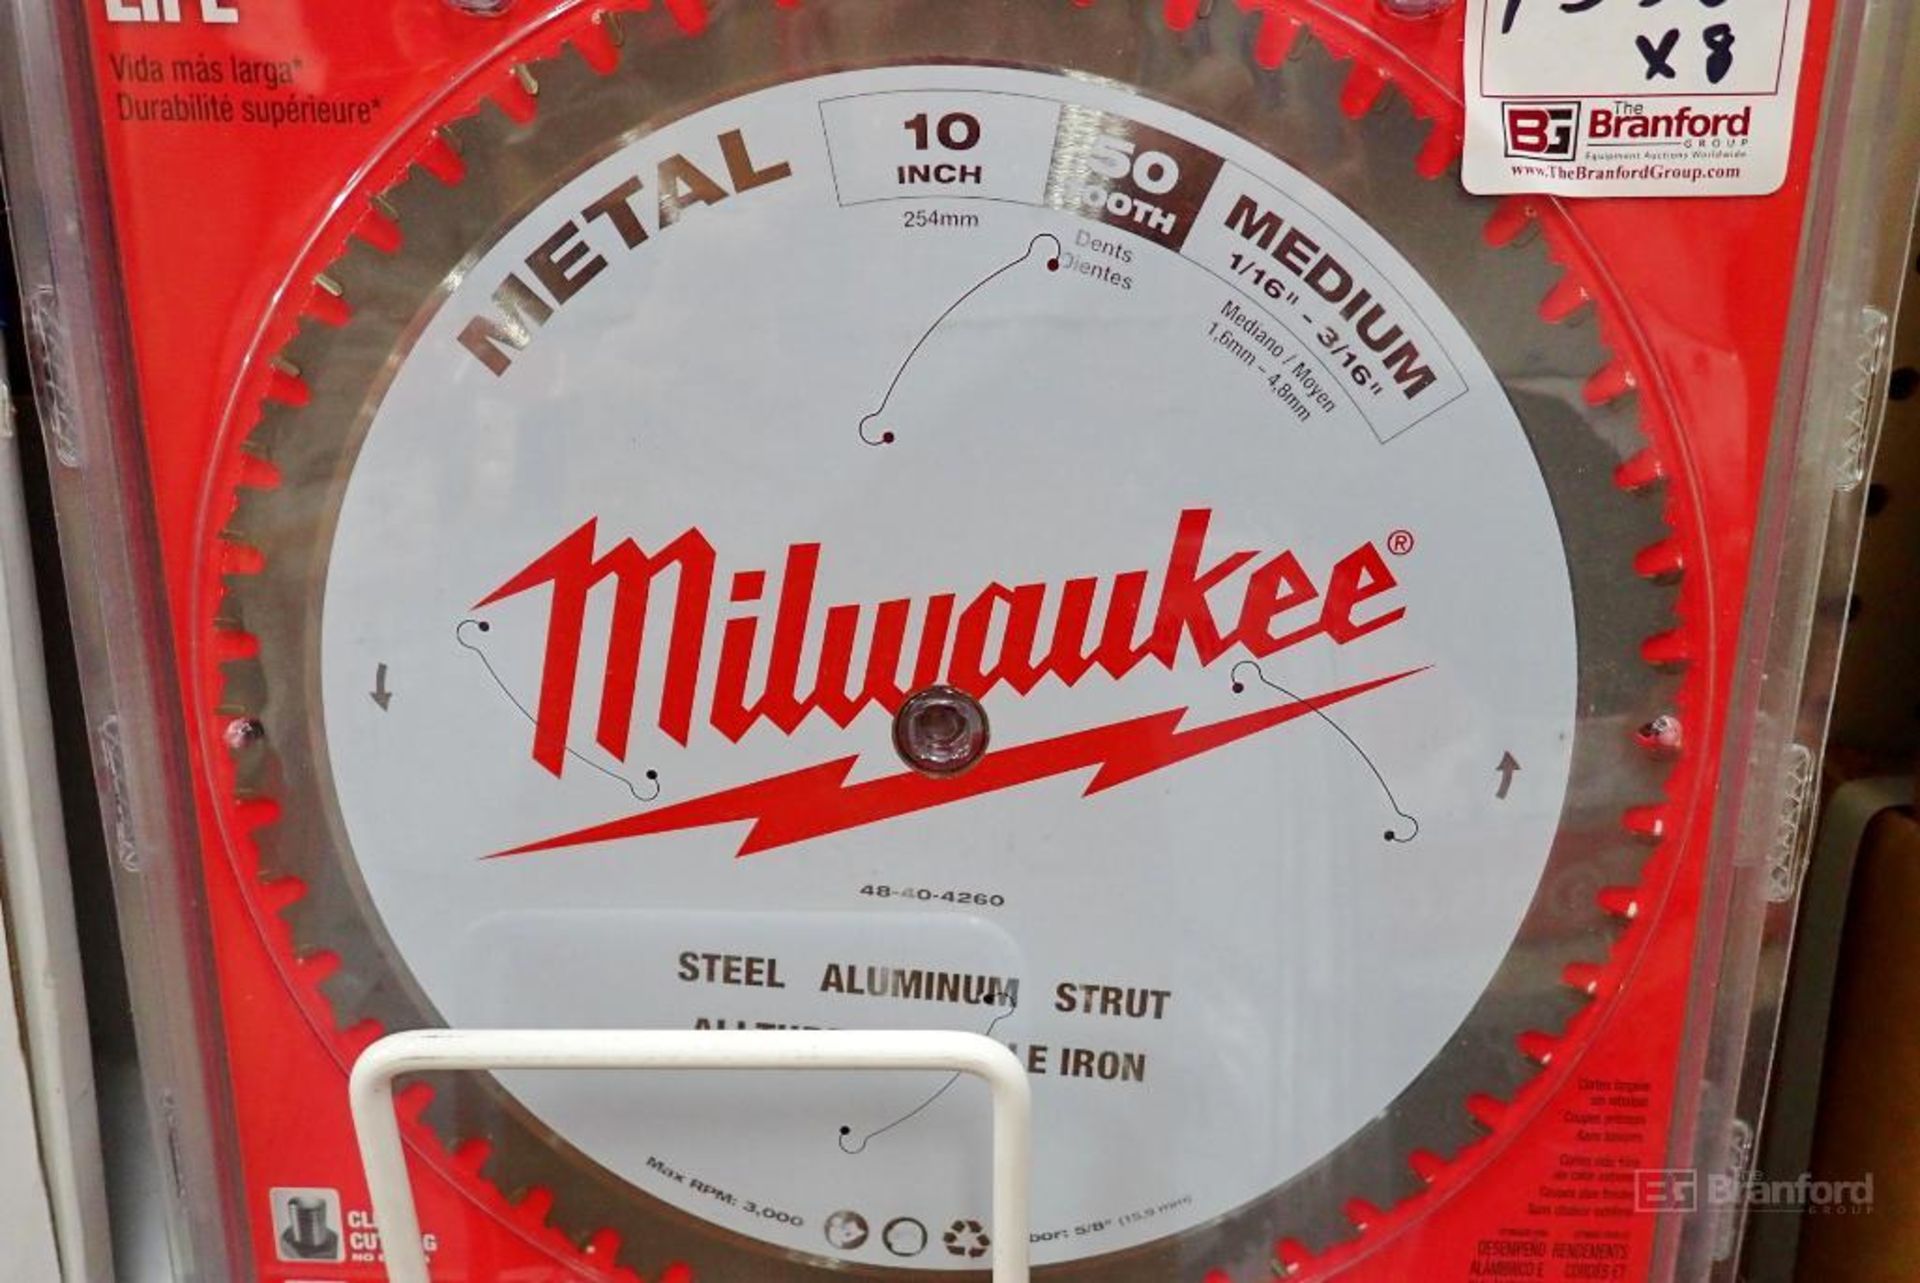 (8) Milwaukee 48-40-4260 10" Metal Saw Blades